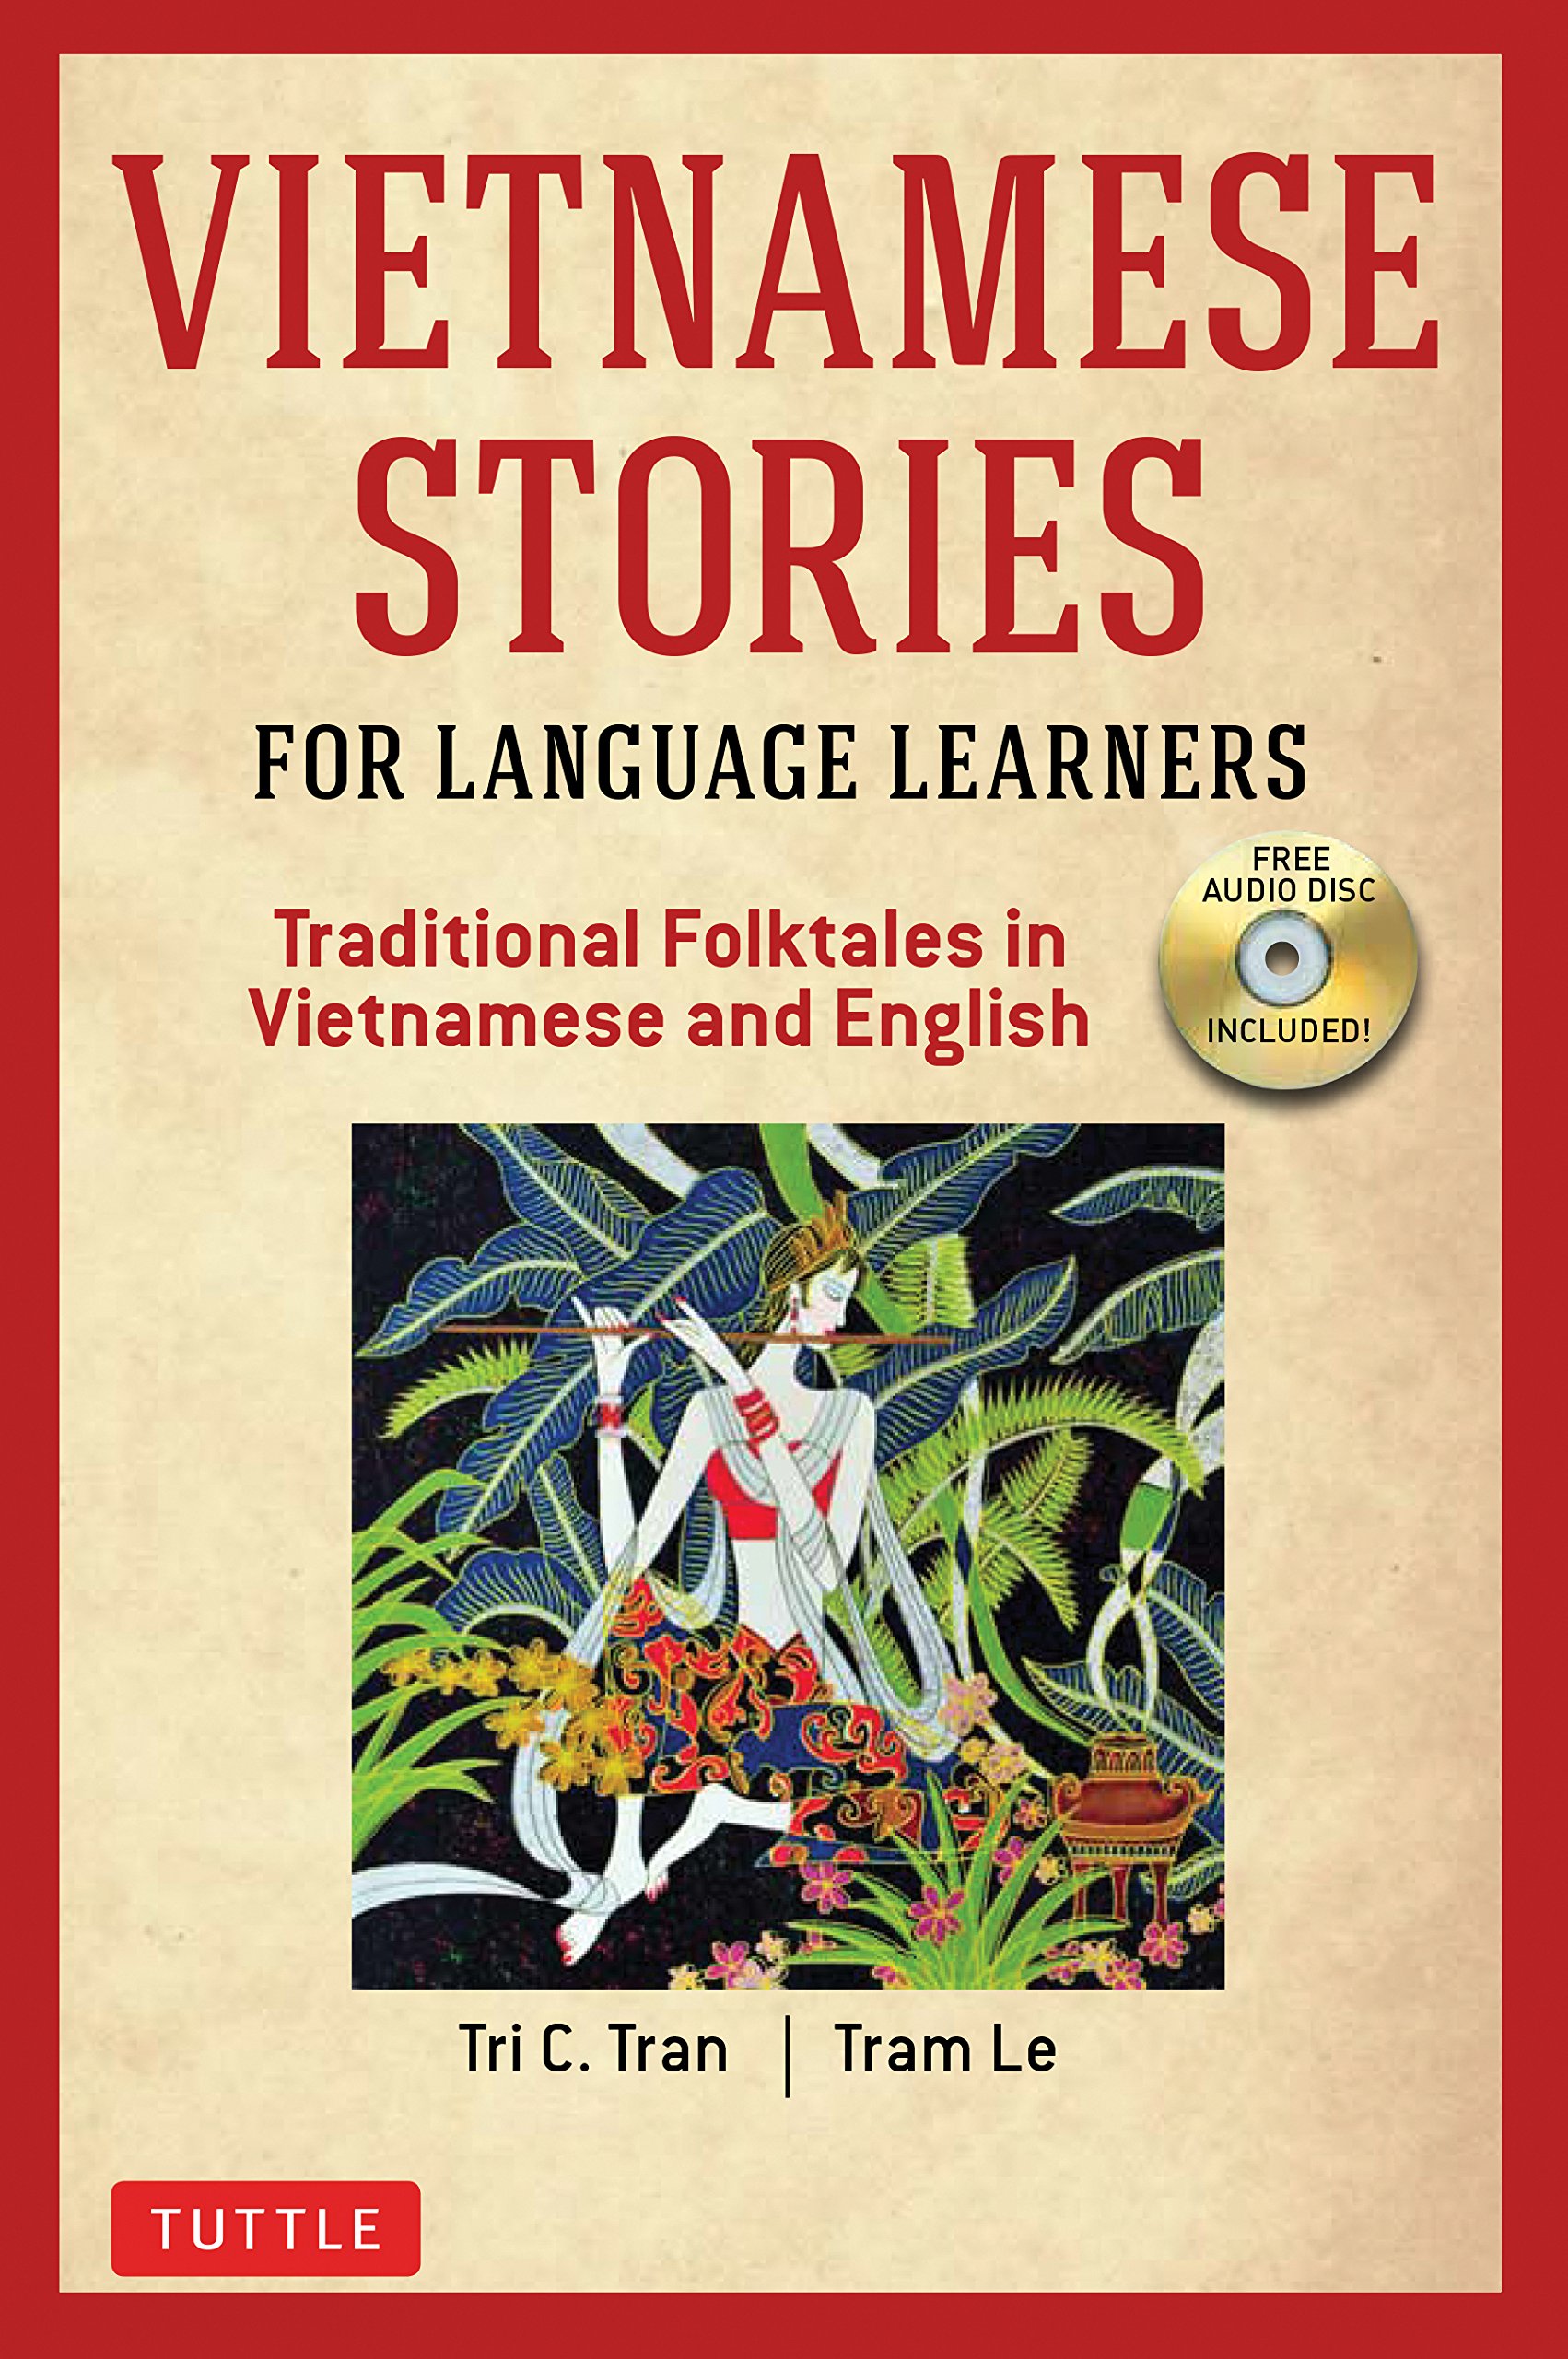 Bilingual book vietnamese-english - Vietnamese Stories for Language Learners